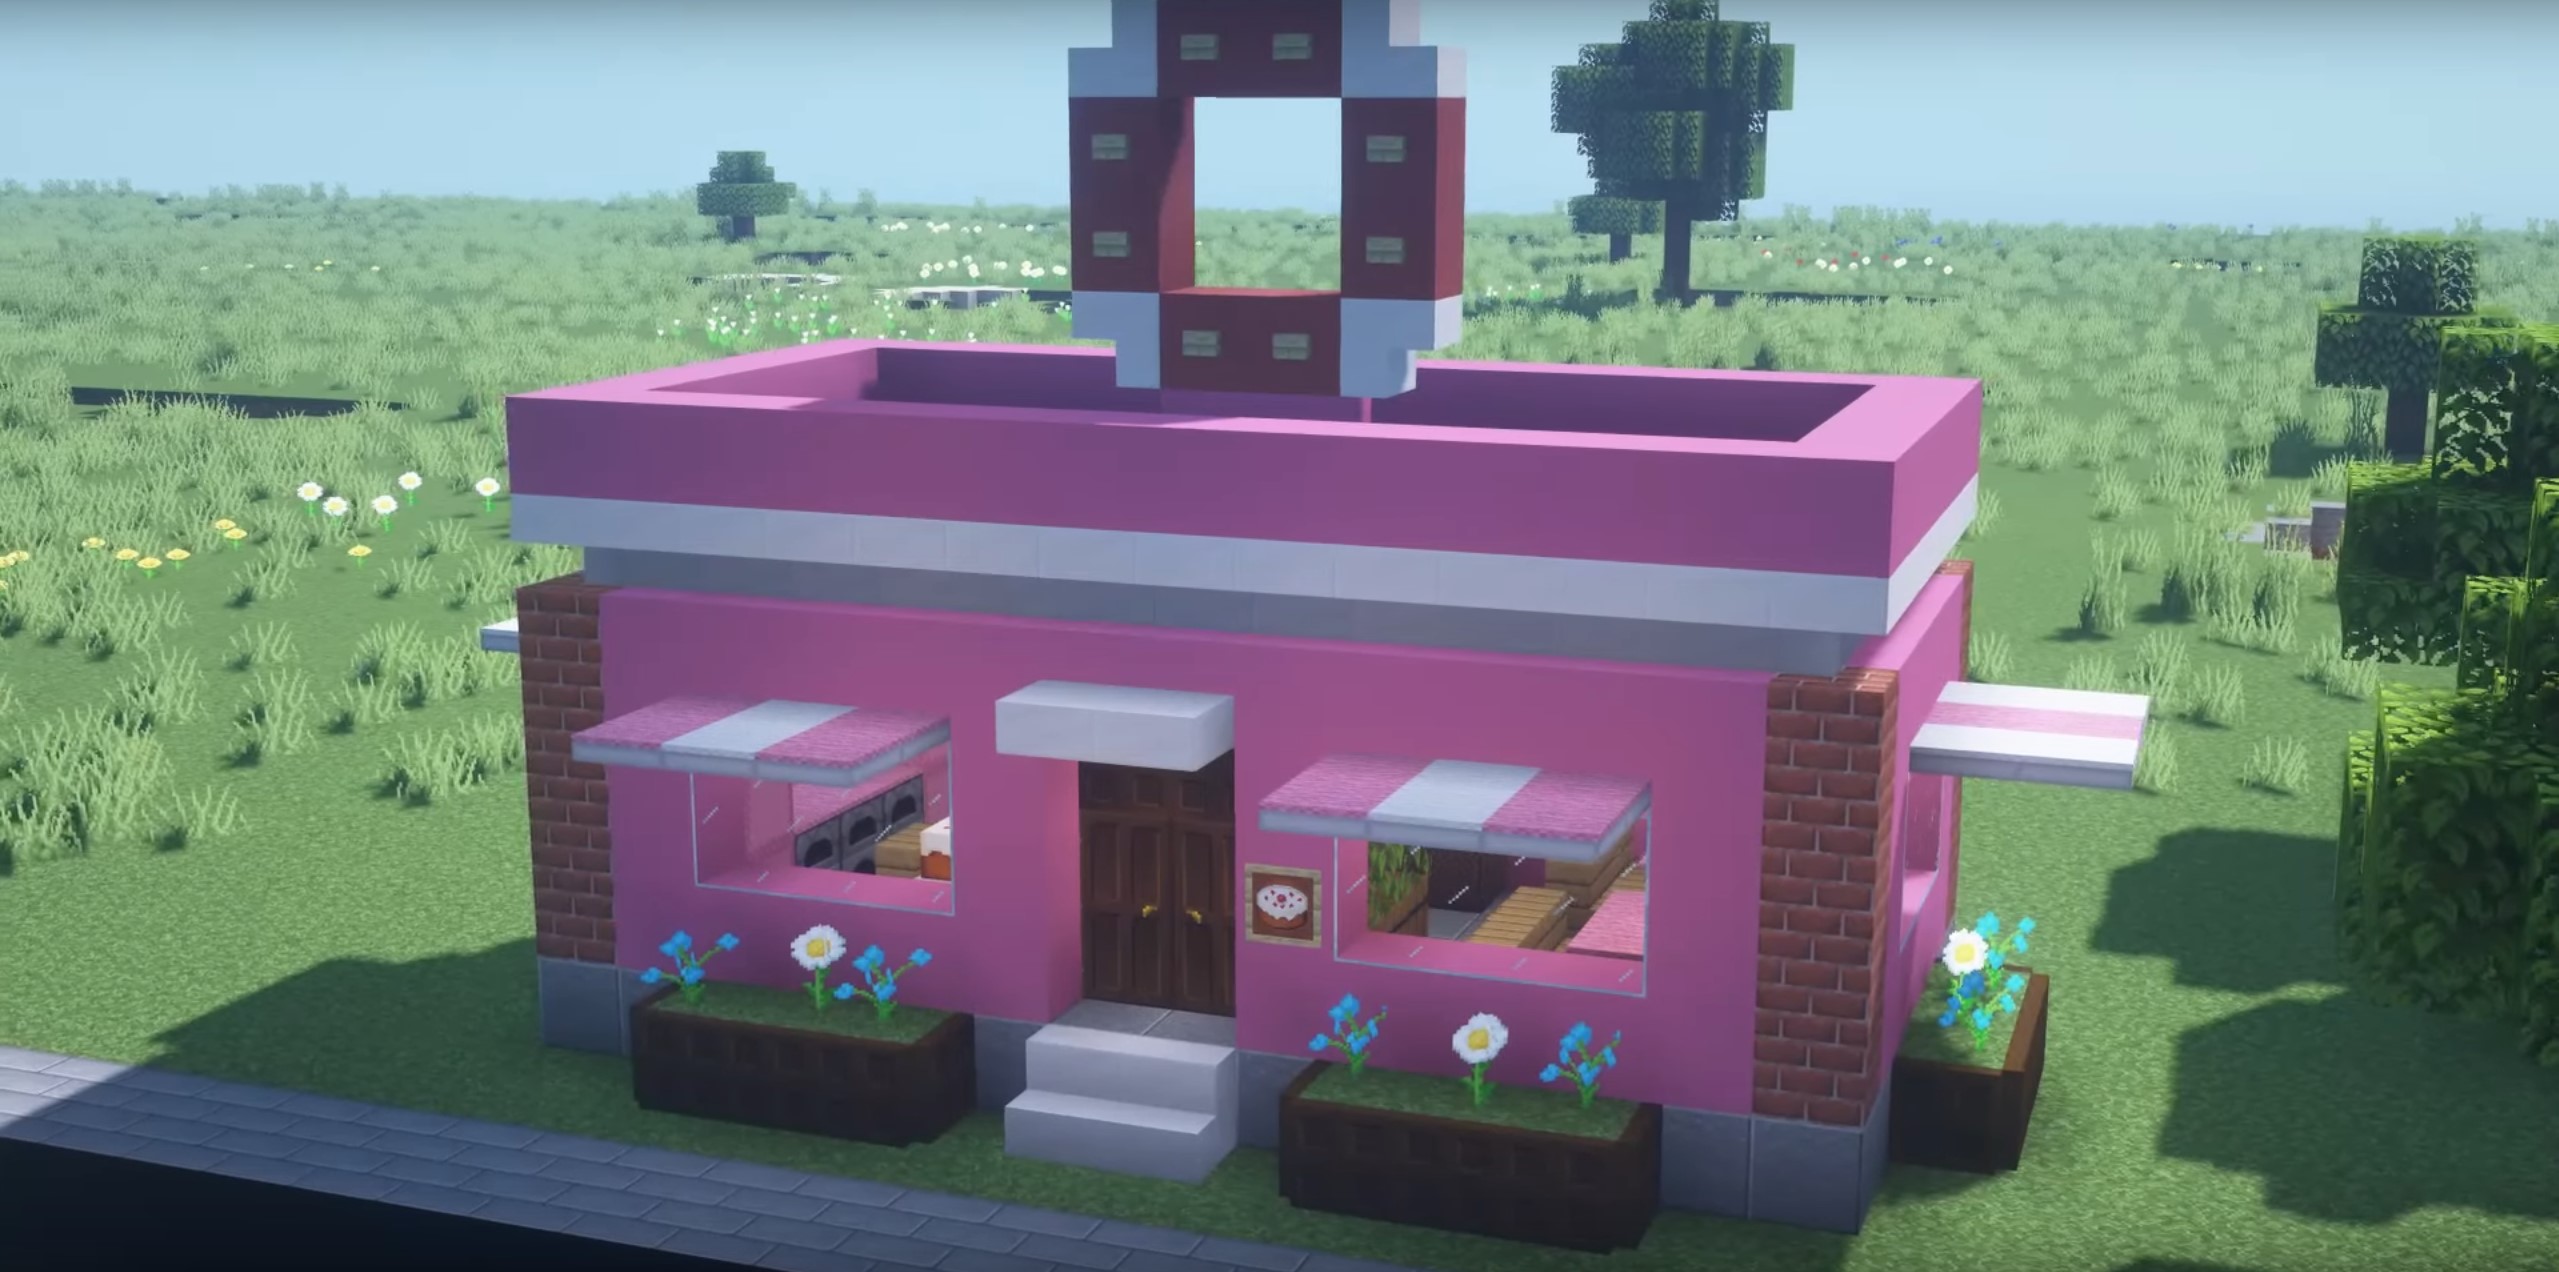 Donut Shop minecraft building idea